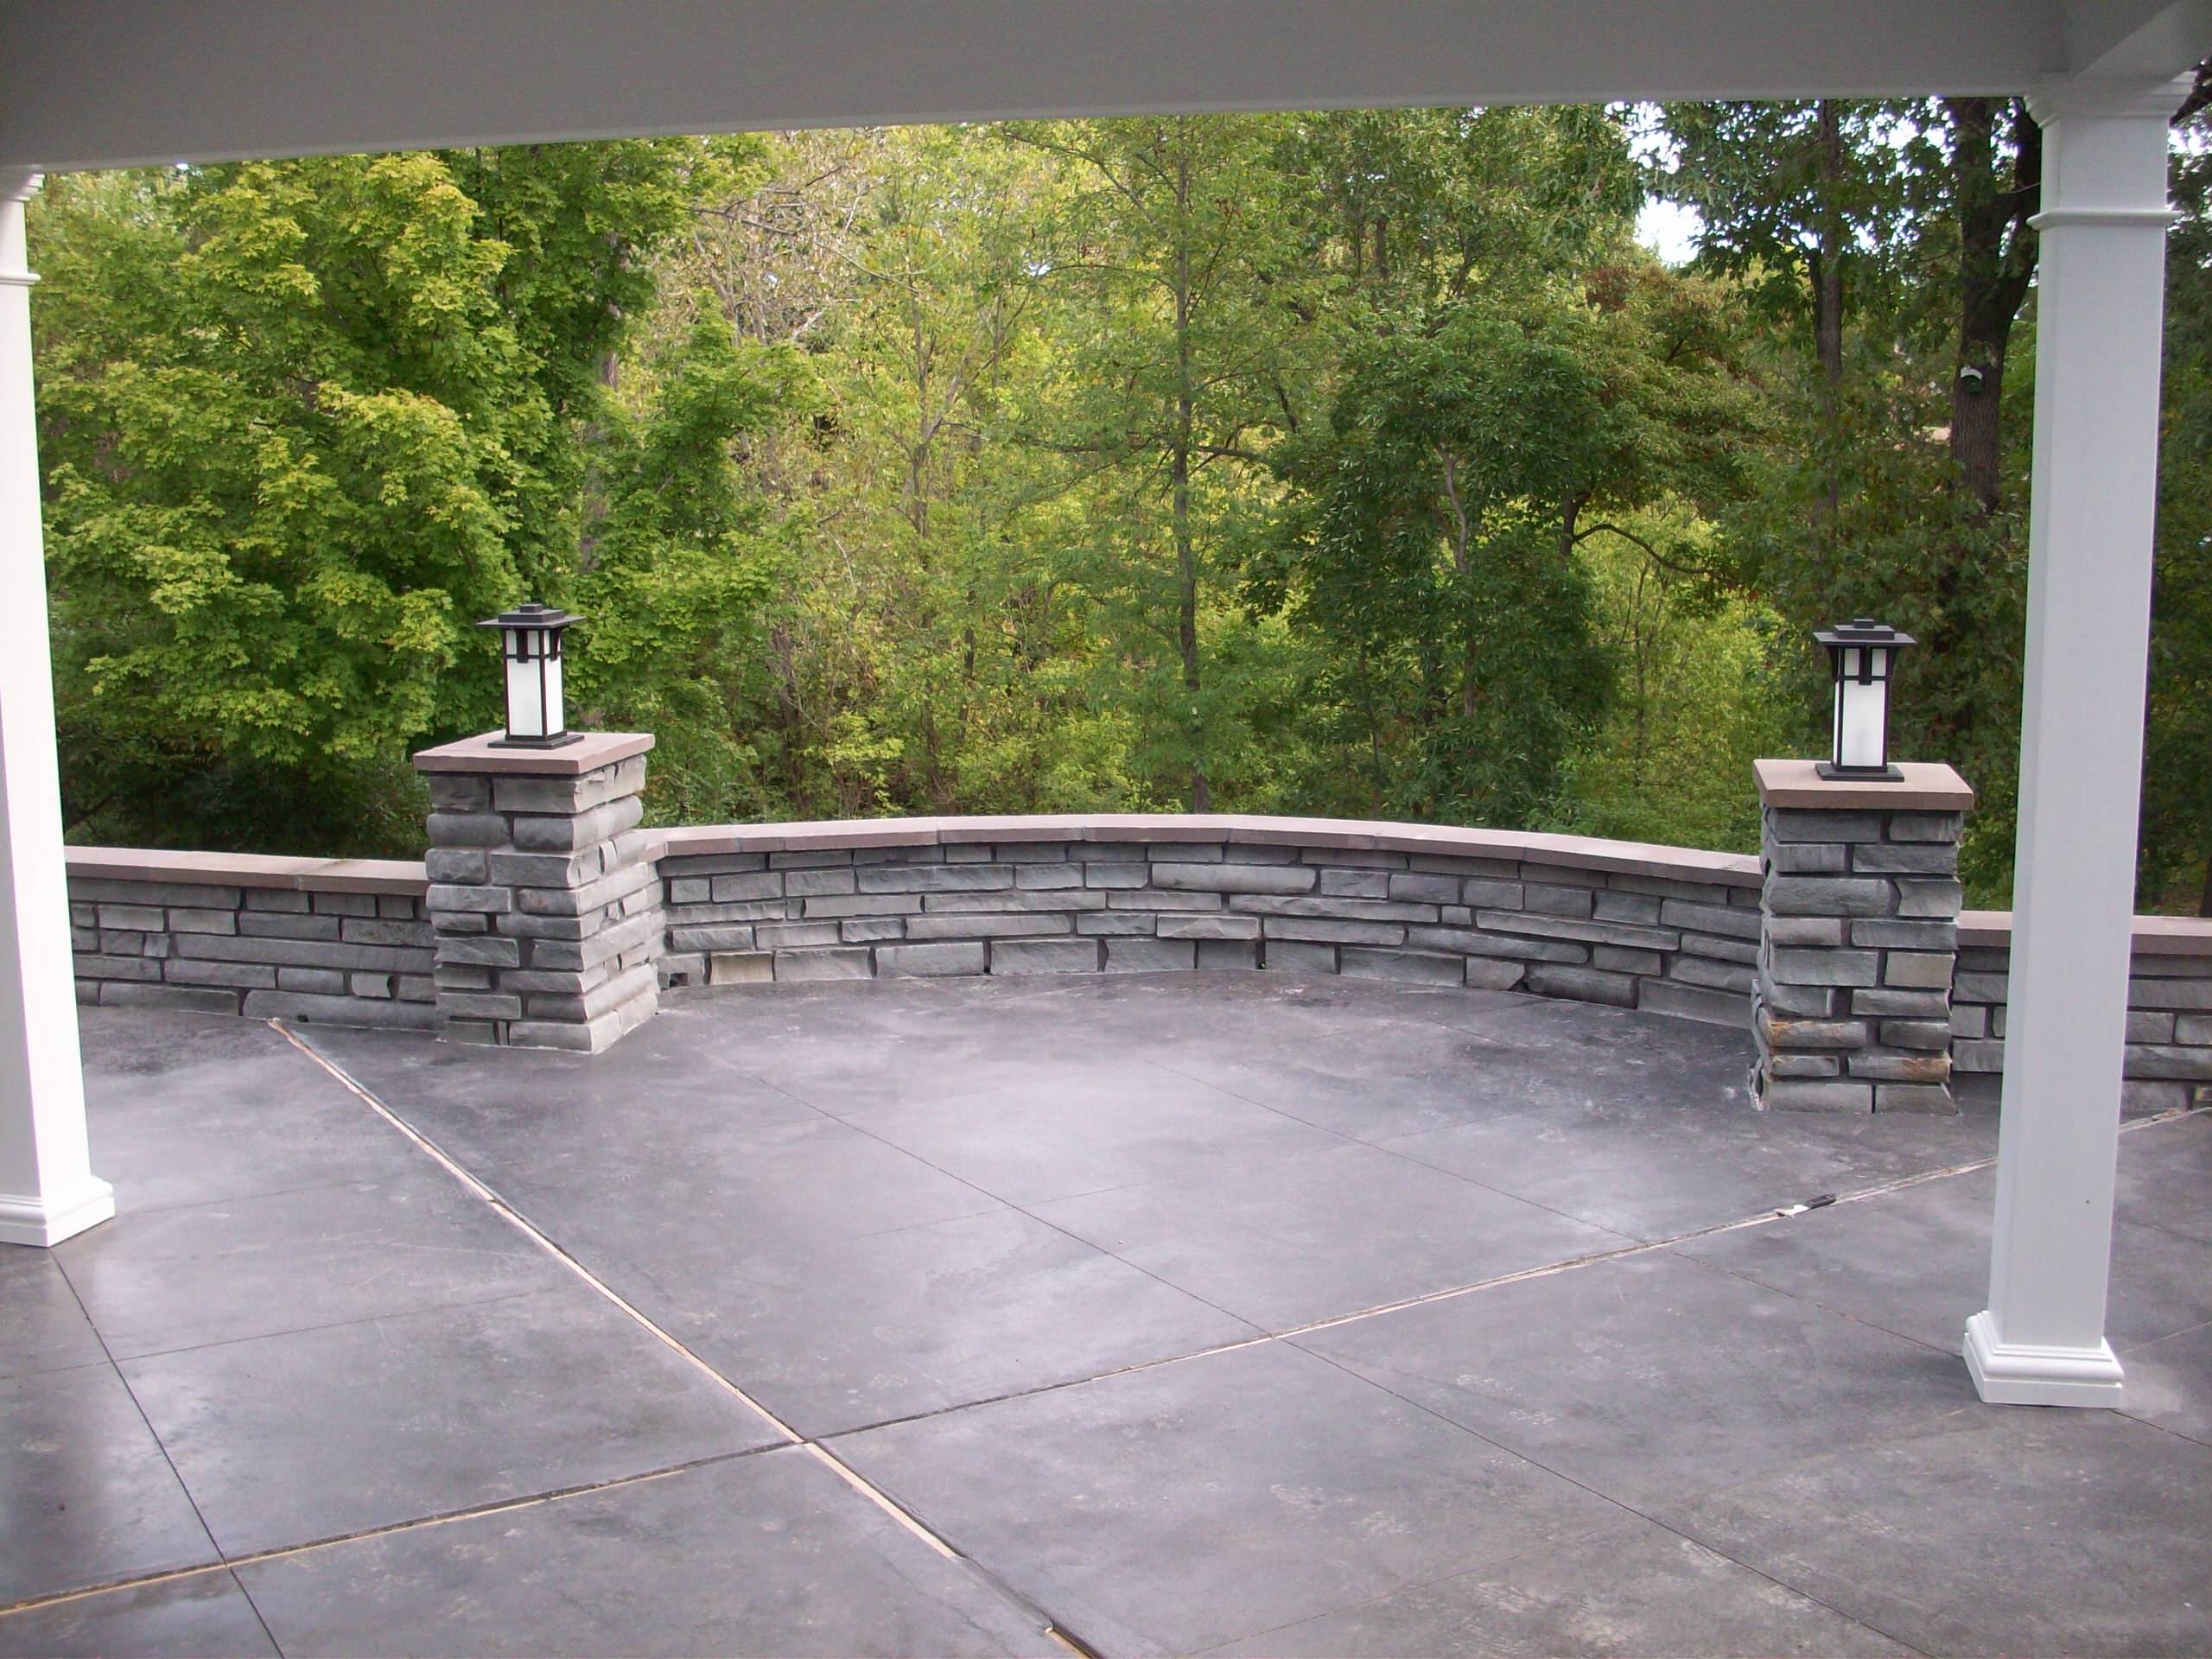 Chesterfield, Missouri Bluestone Masonry Walls with Charcoal Concrete